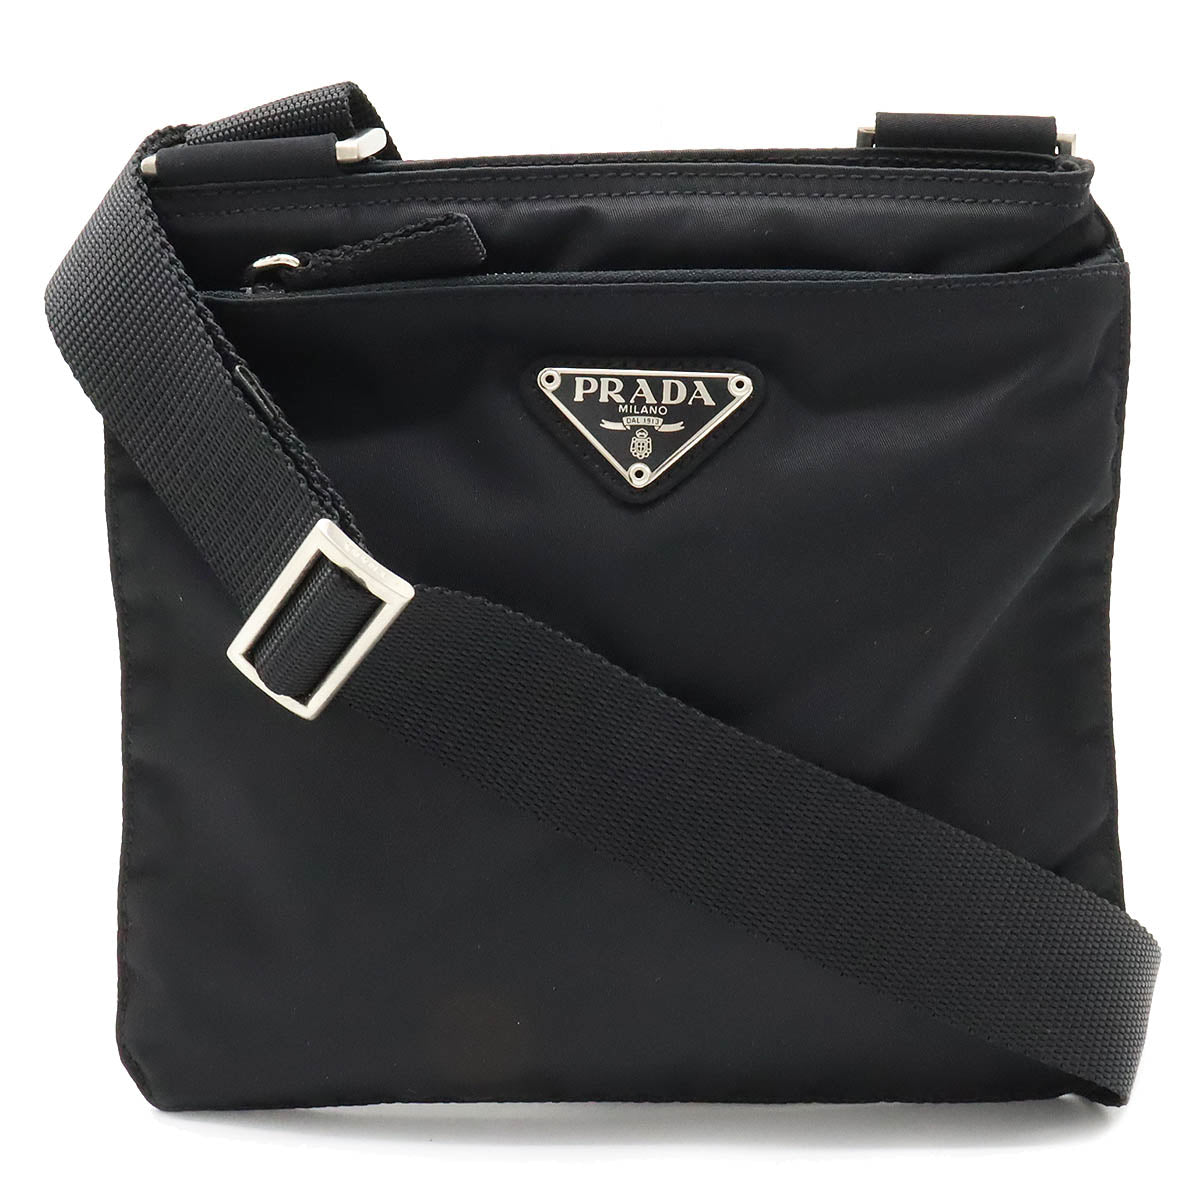 Prada Vitello Phenix Black Leather Web Stripe Crossbody Satchel Bag, Handbags, Clothing & Accessories